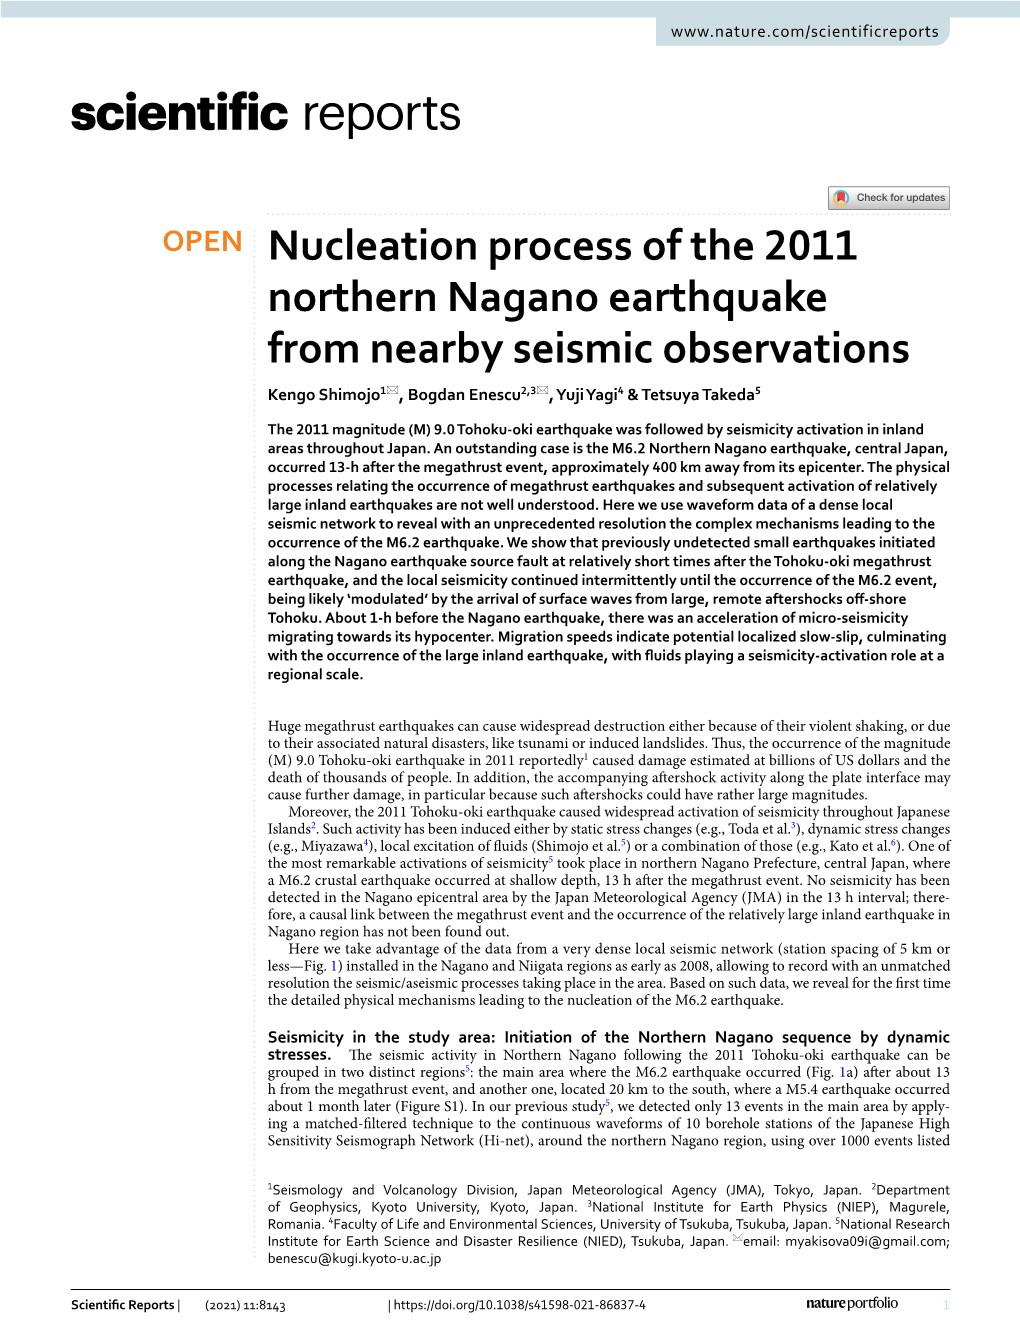 Nucleation Process of the 2011 Northern Nagano Earthquake from Nearby Seismic Observations Kengo Shimojo1*, Bogdan Enescu2,3*, Yuji Yagi4 & Tetsuya Takeda5